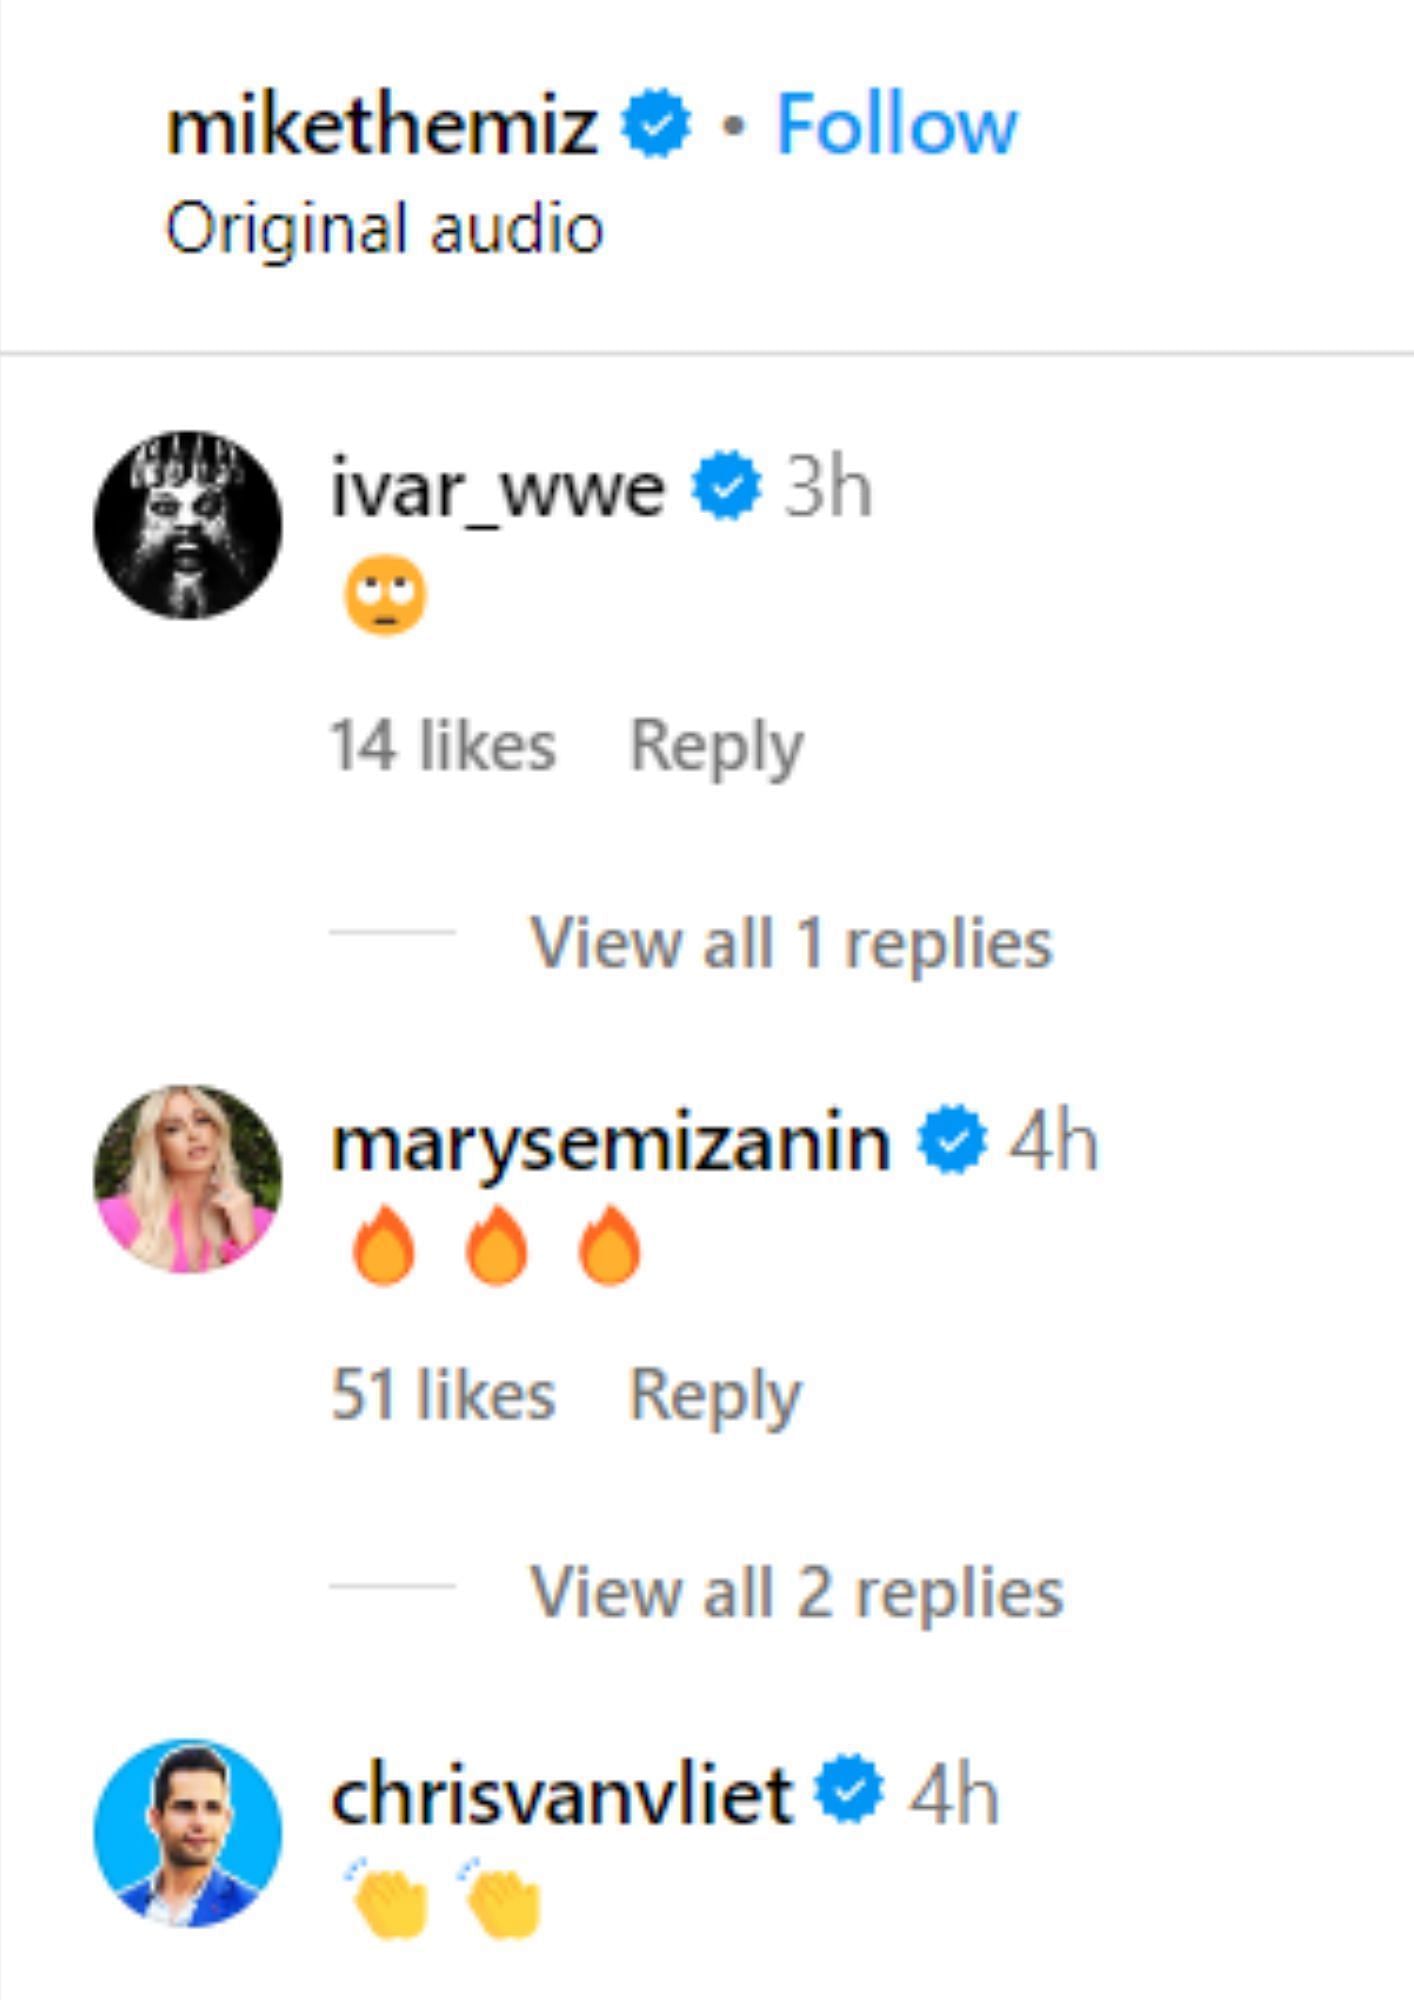 Ivar, Maryse, and Chris Van Vliet commented on The Miz&#039;s post.